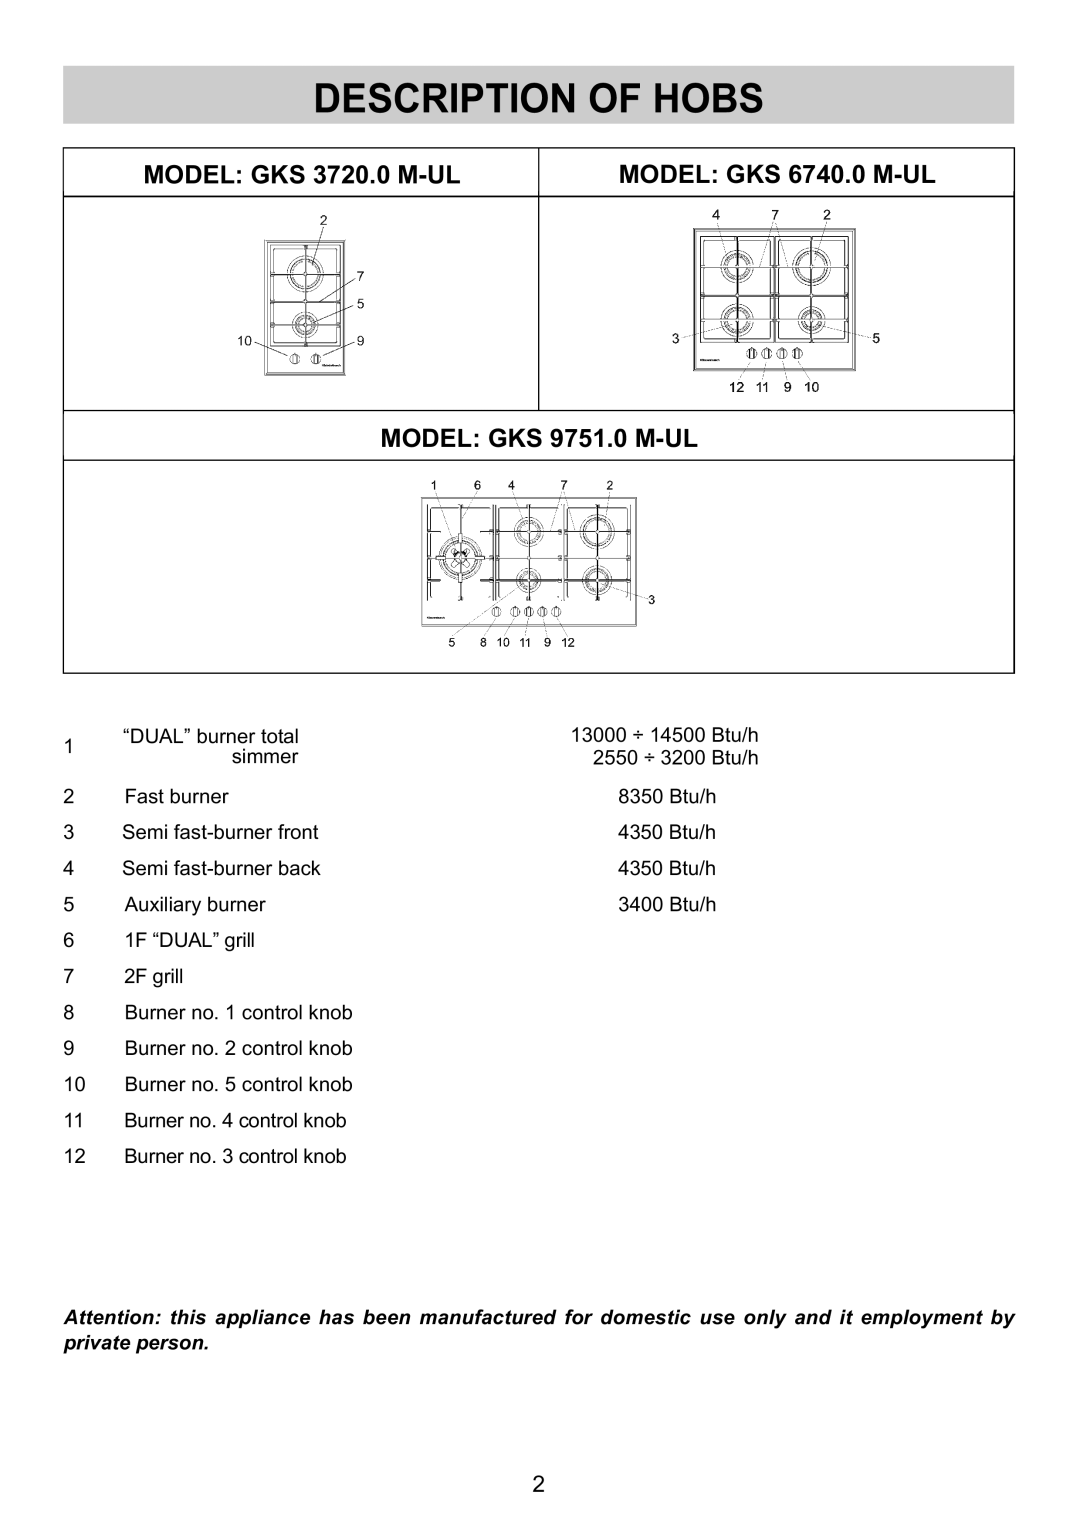 Kuppersbusch USA manual Description Of Hobs, MODEL GKS 3720.0 M-UL, MODEL GKS 6740.0 M-UL, MODEL GKS 9751.0 M-UL 